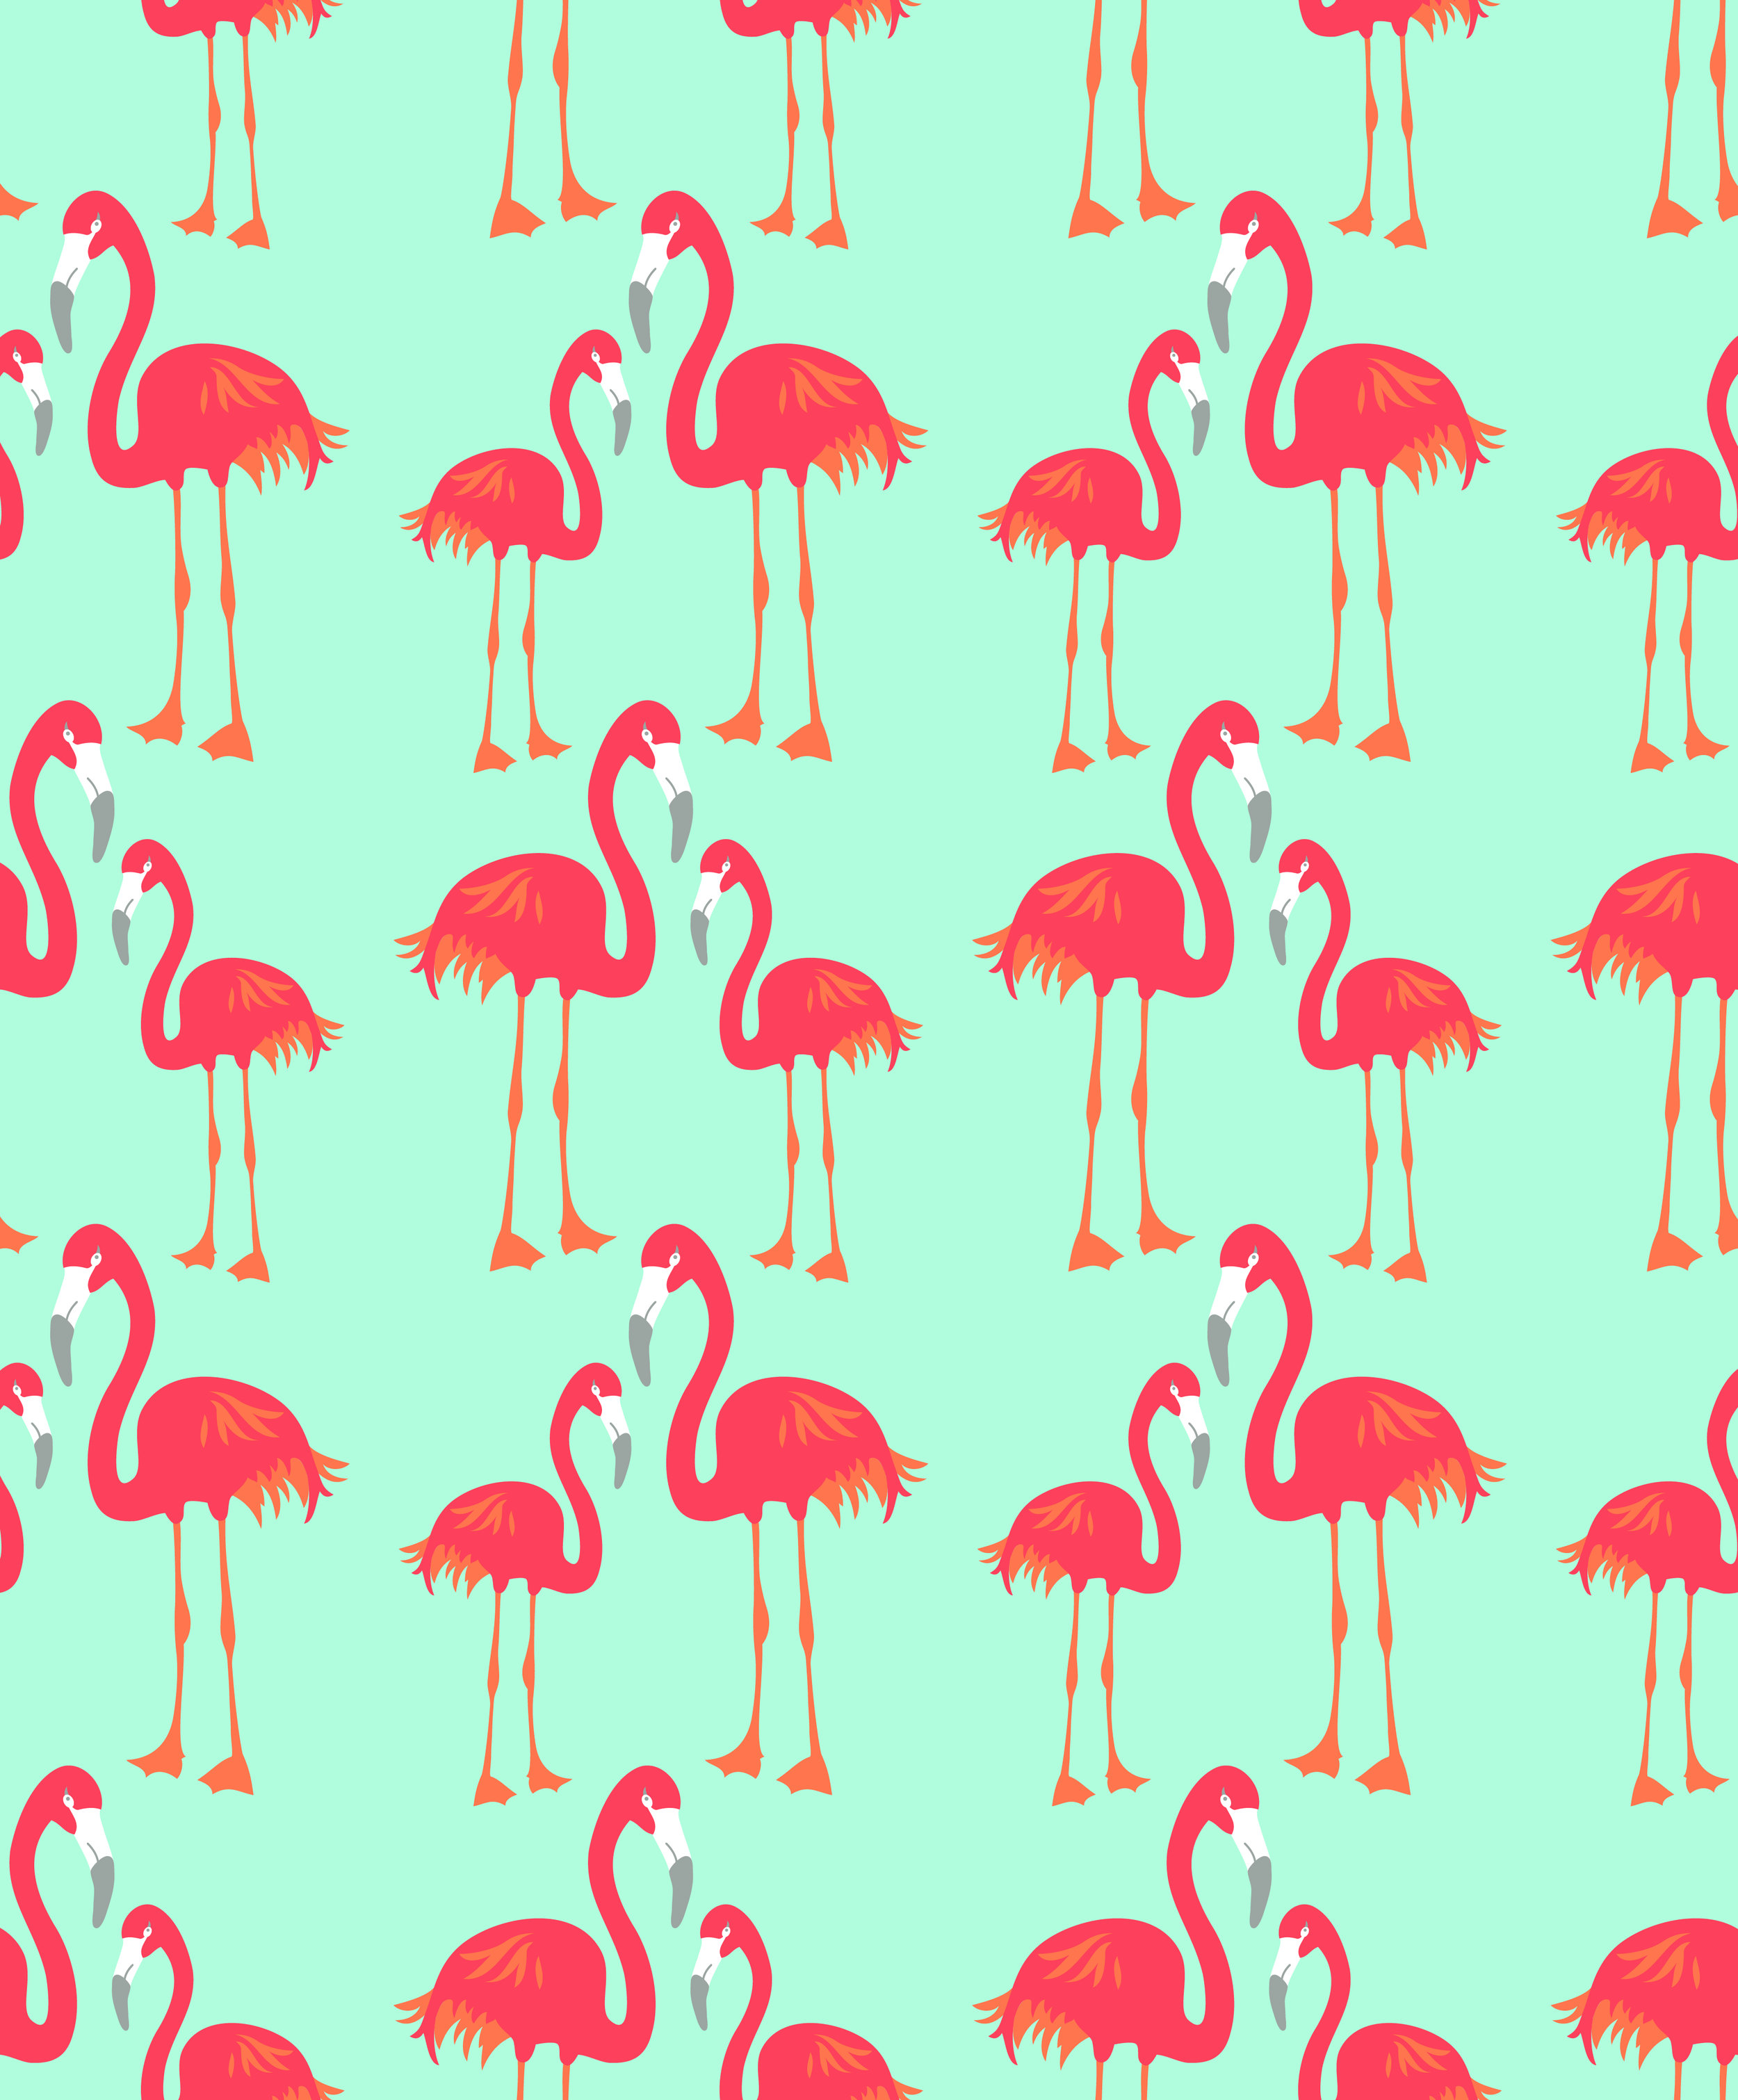 flamingo master-01.jpg